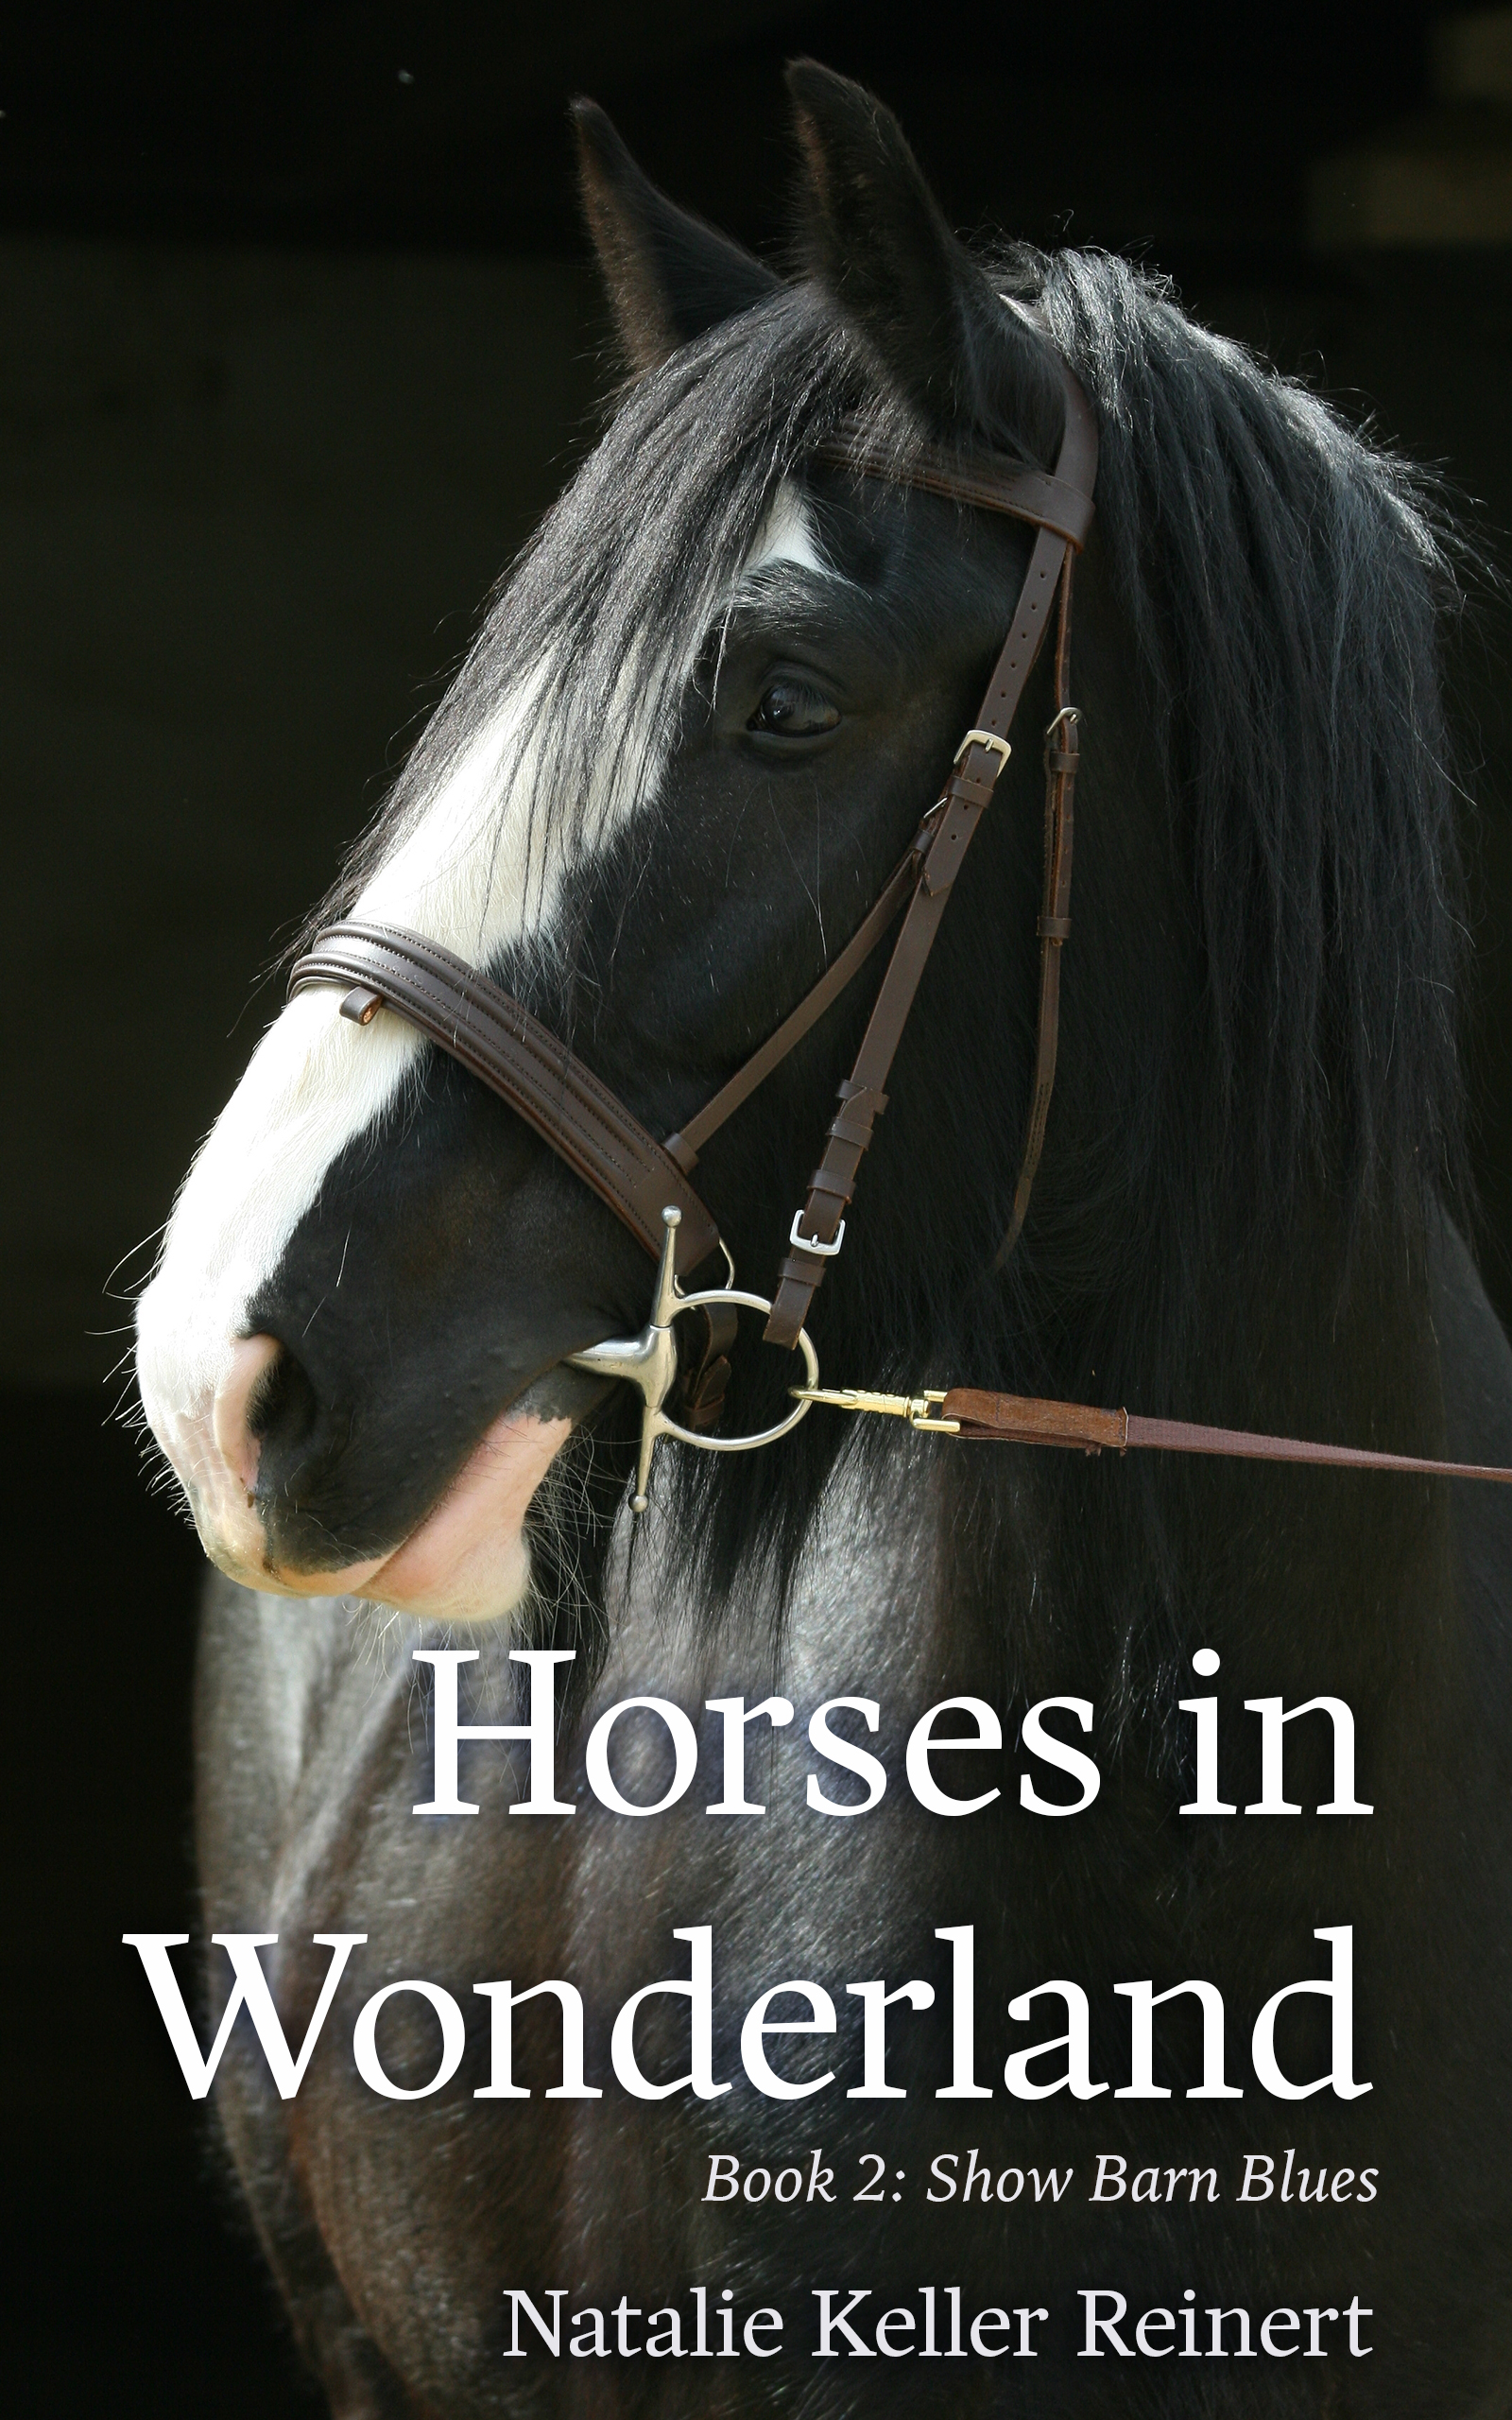 Horses in Wonderland book cover